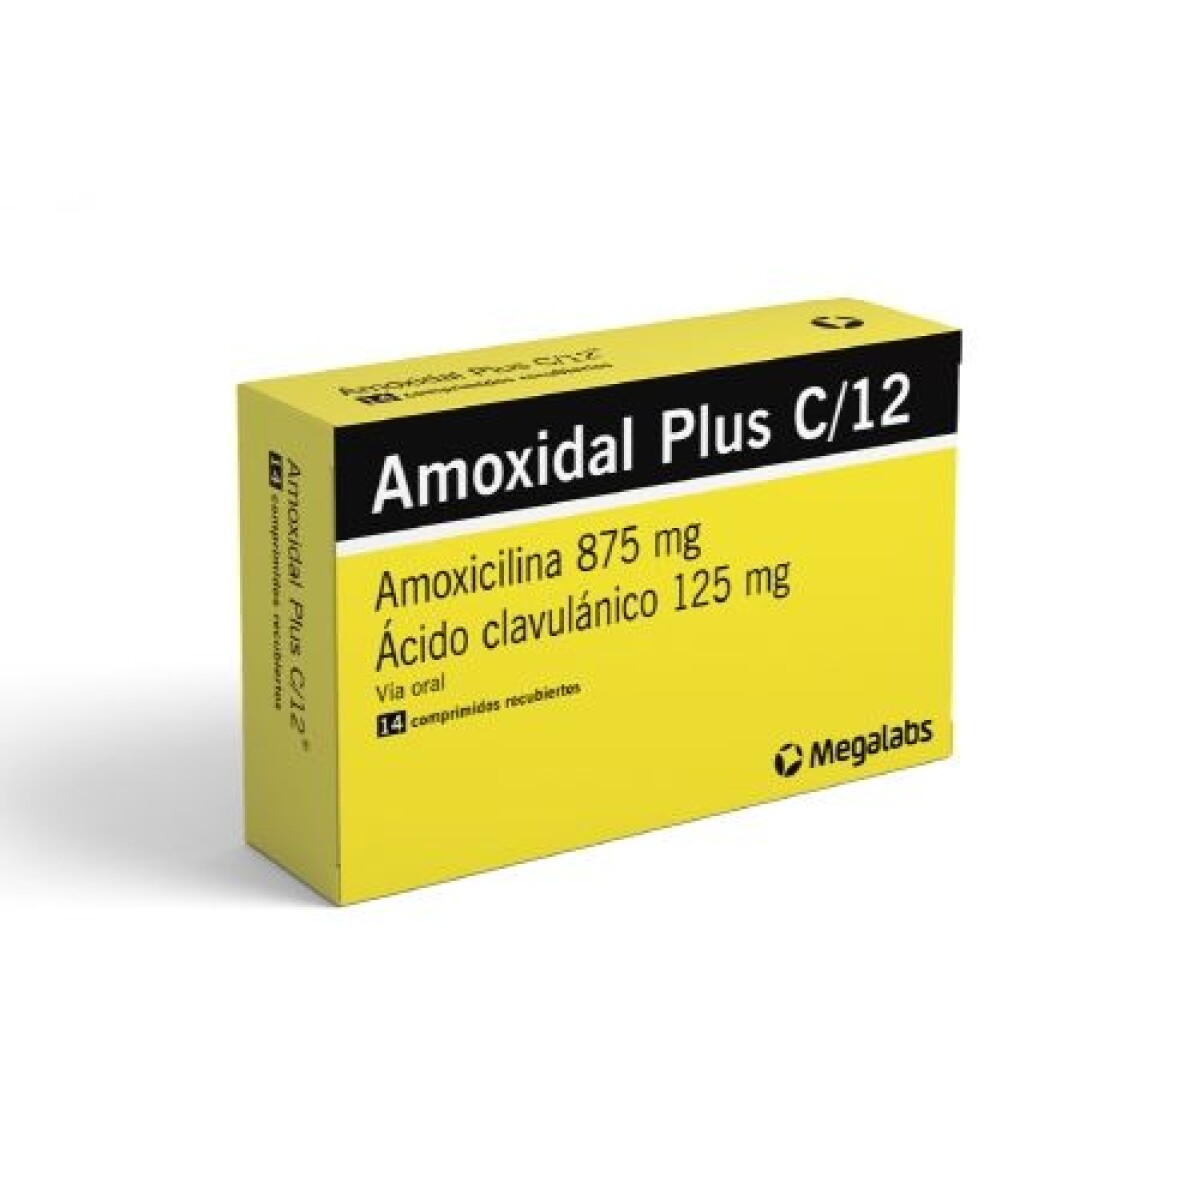 Amoxidal Plus C/12 14 Comprimidos 